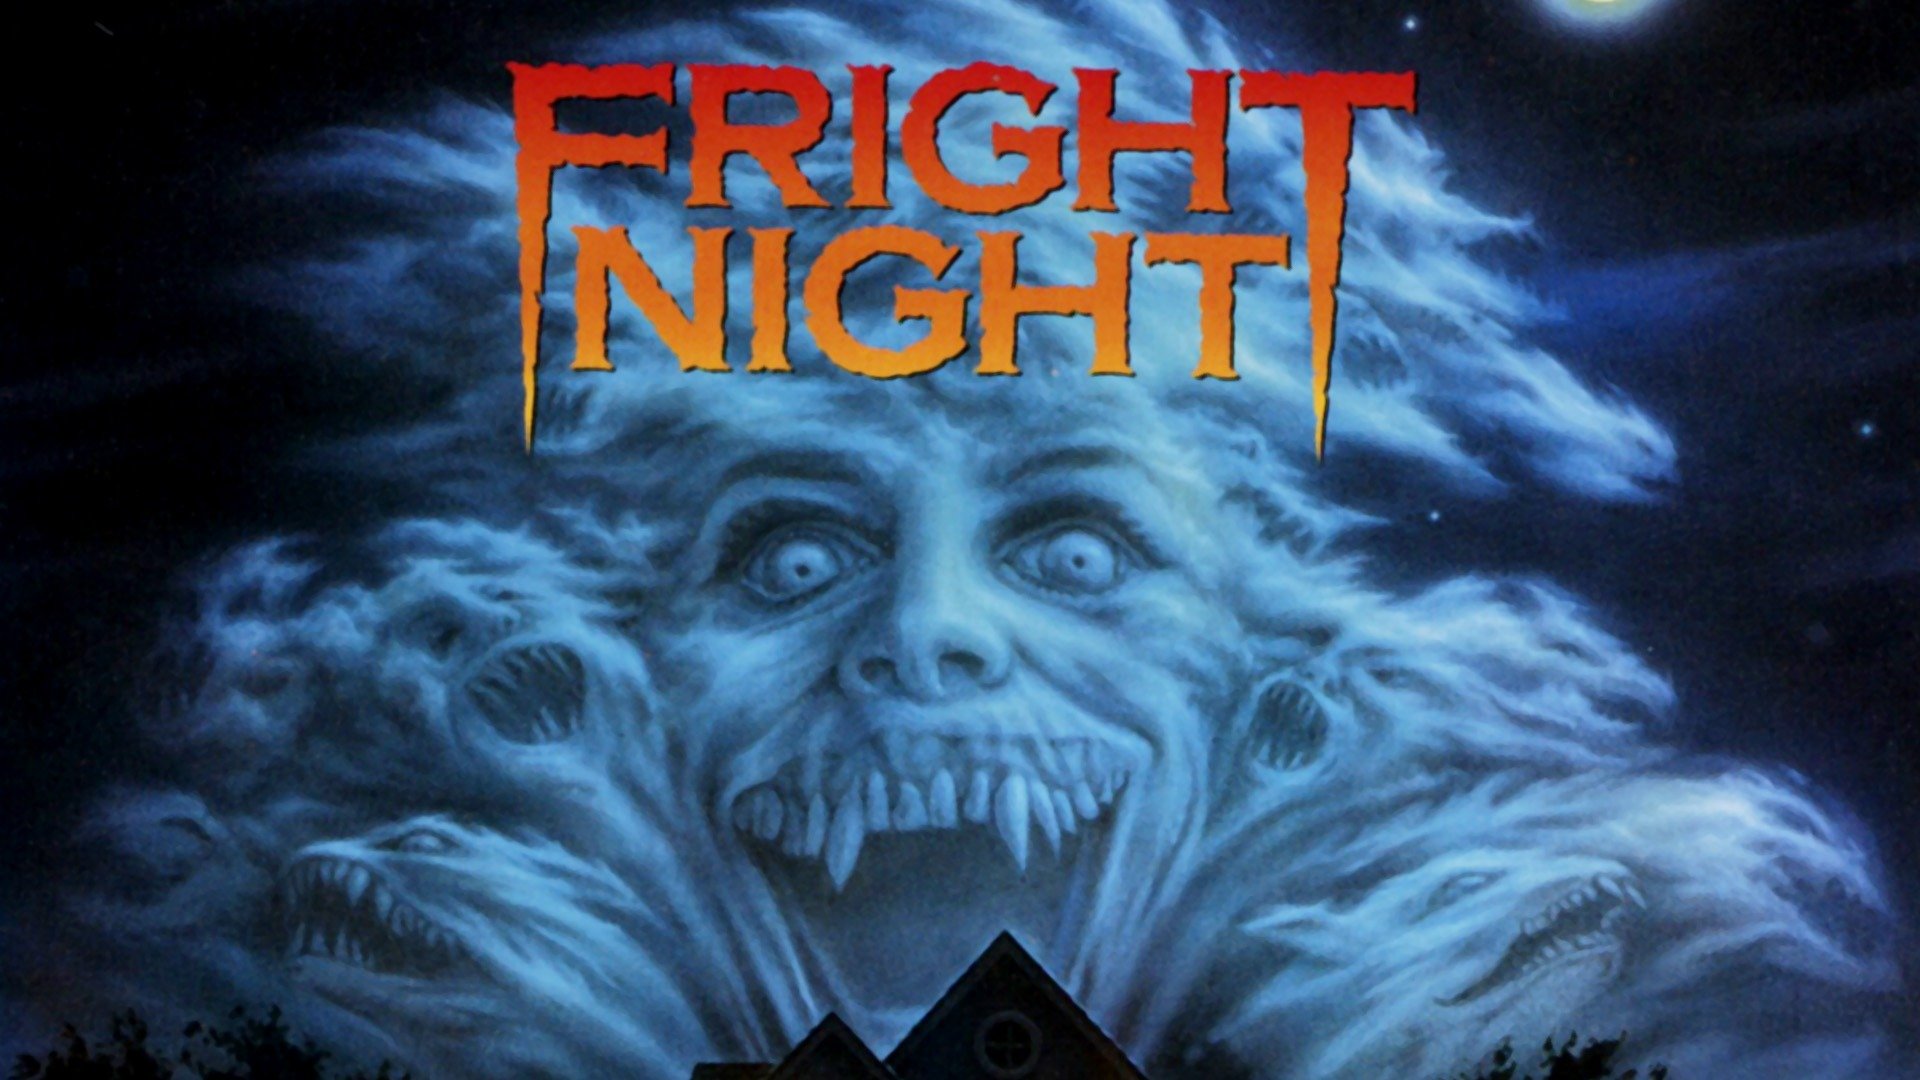 fright night 1985 cast